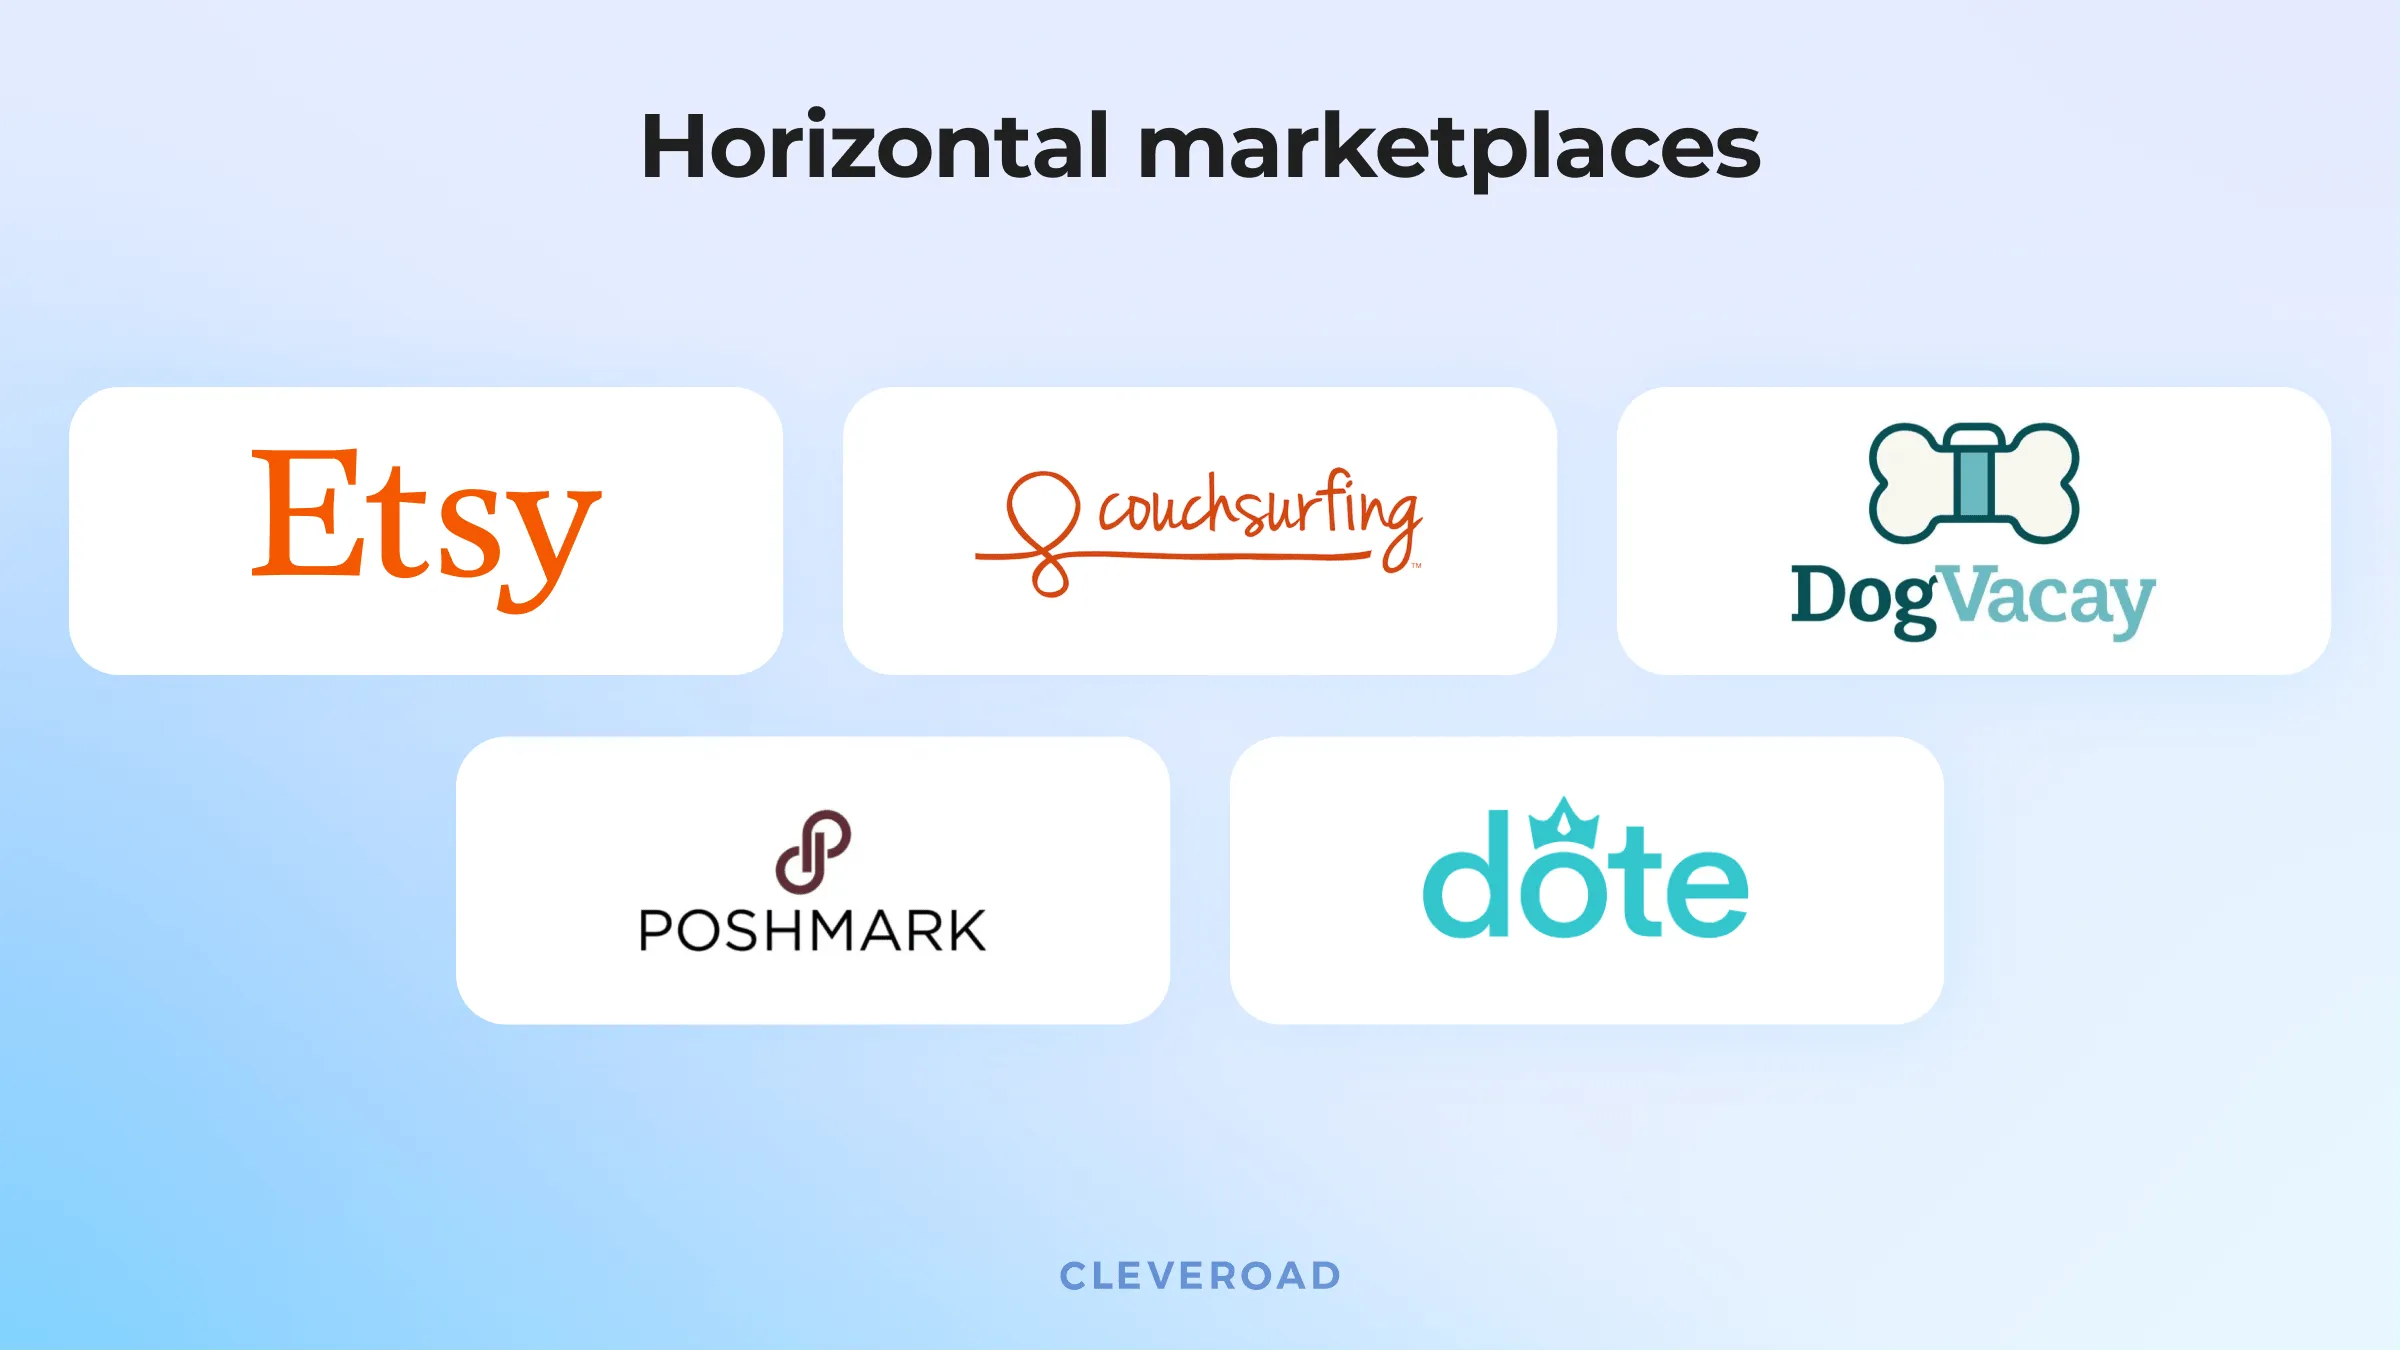 Popular horizontal marketplaces